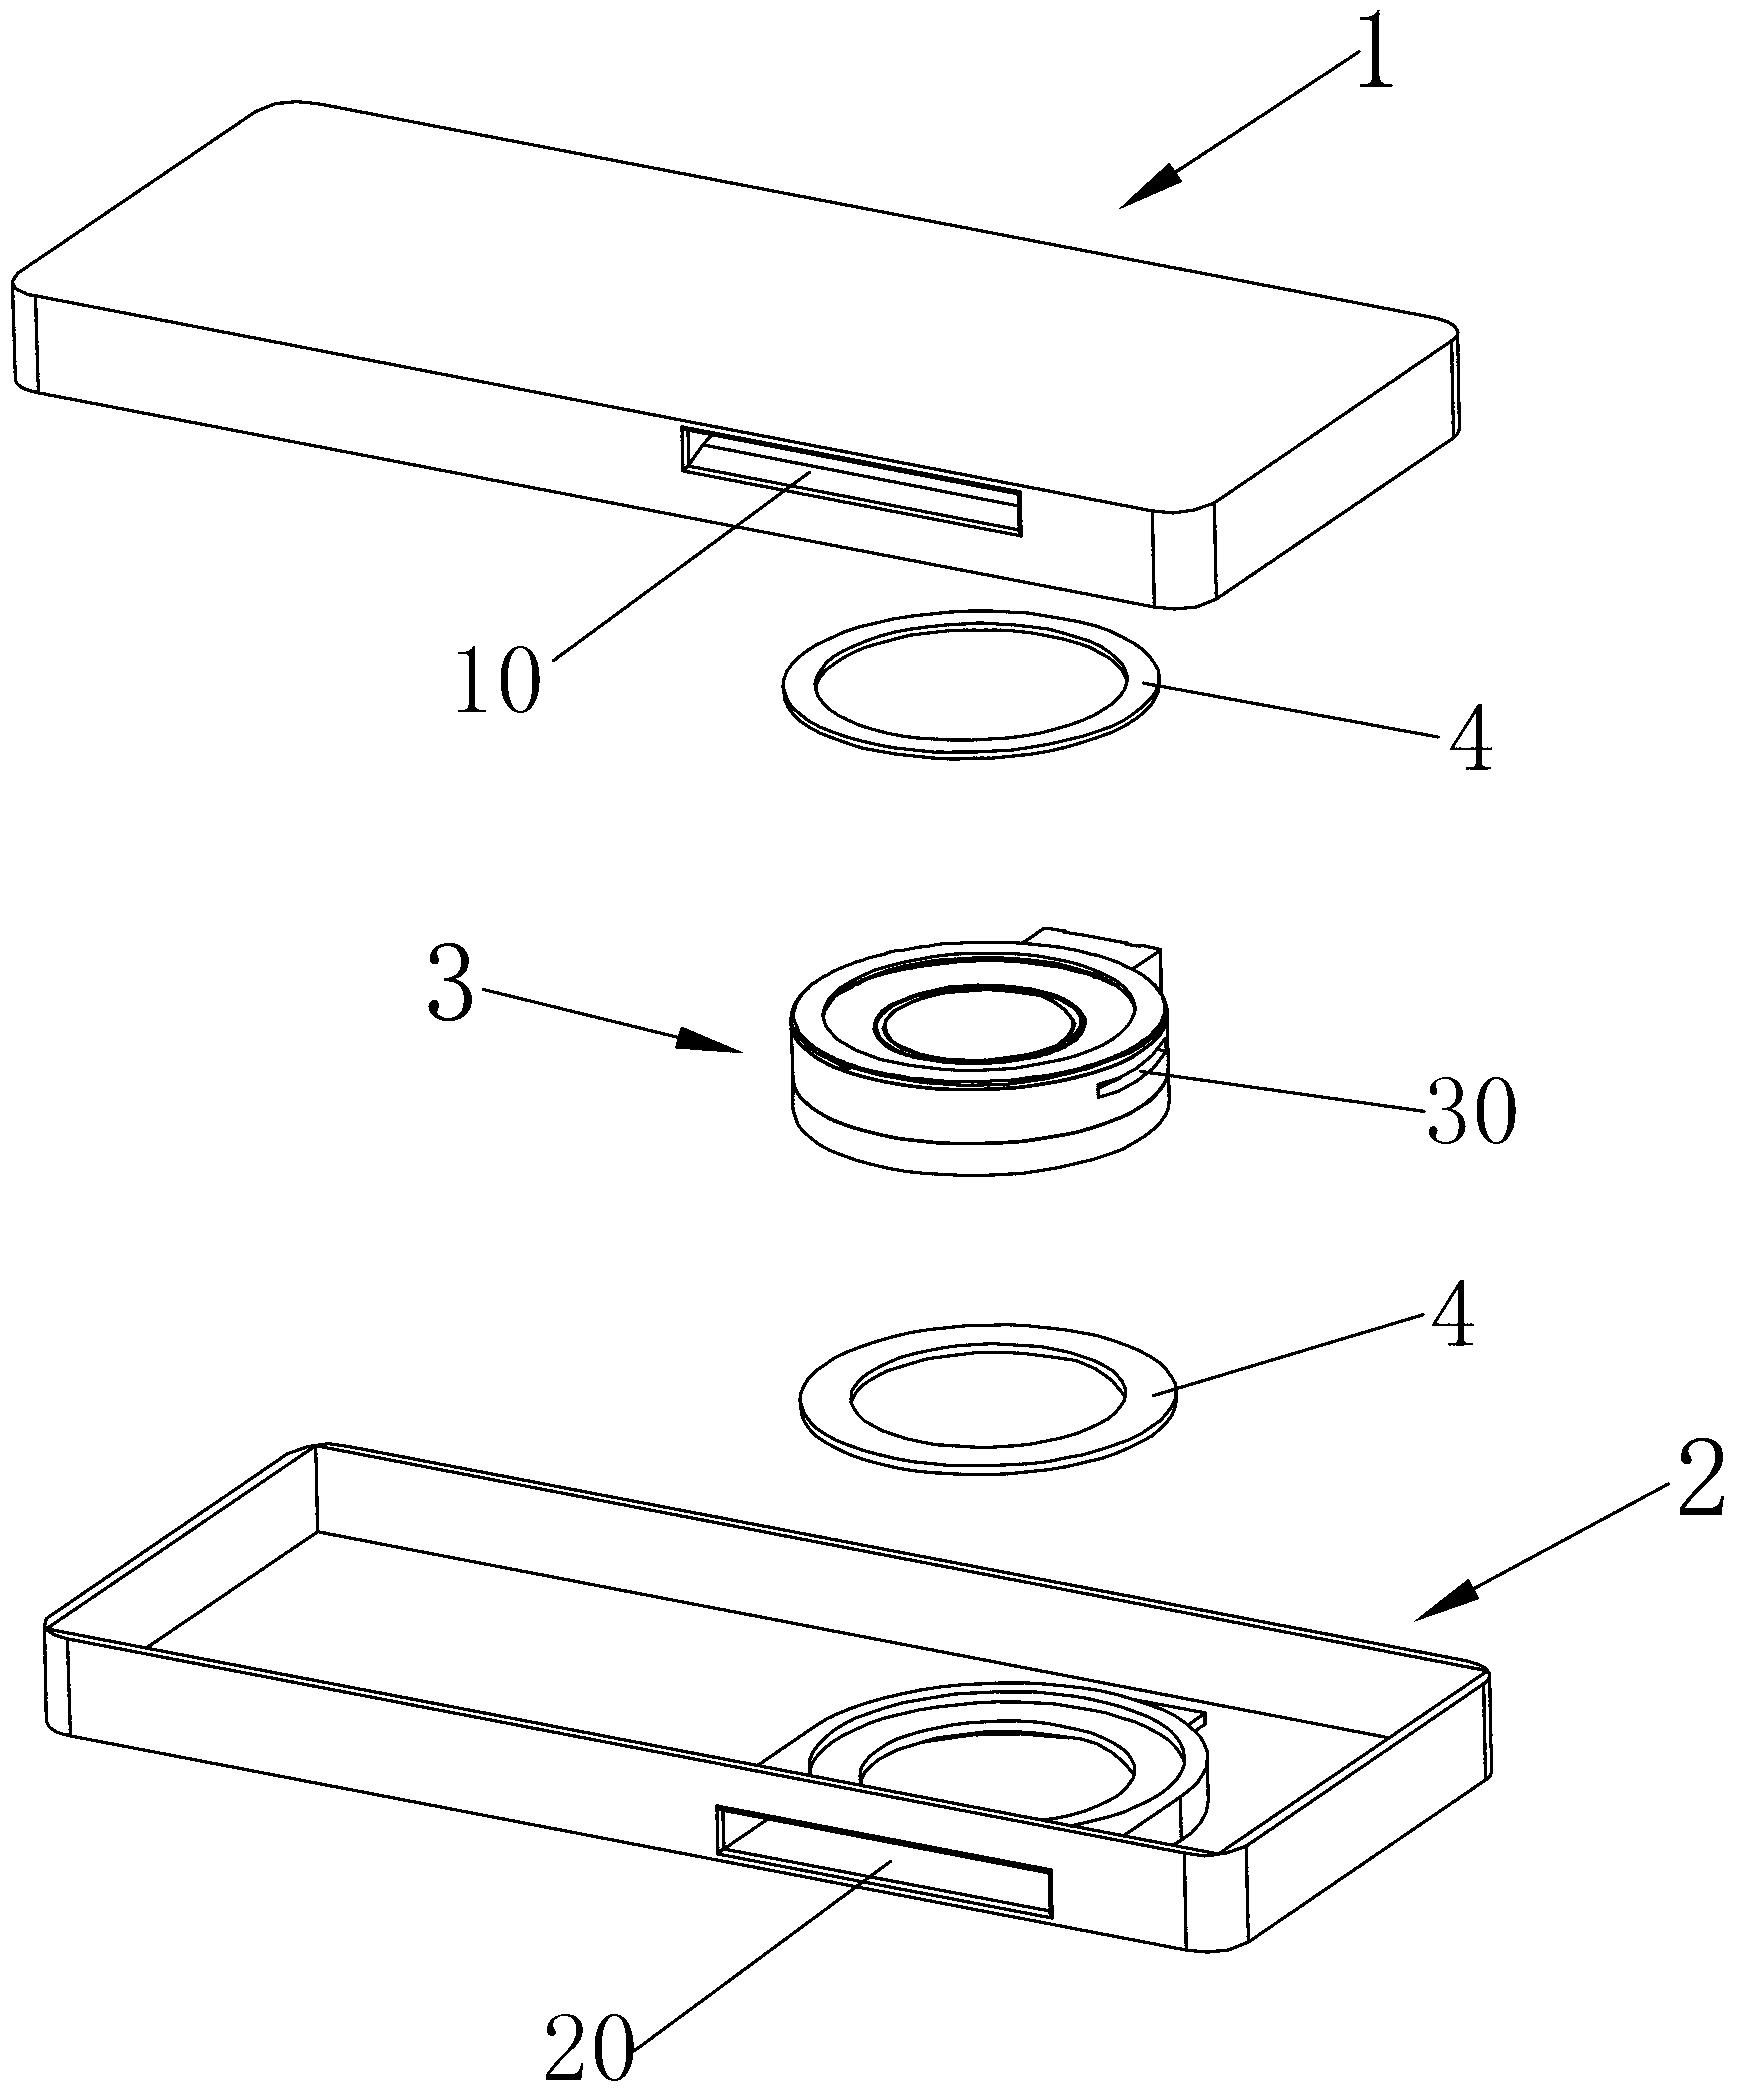 Double-vibrating-diaphragm speaker module